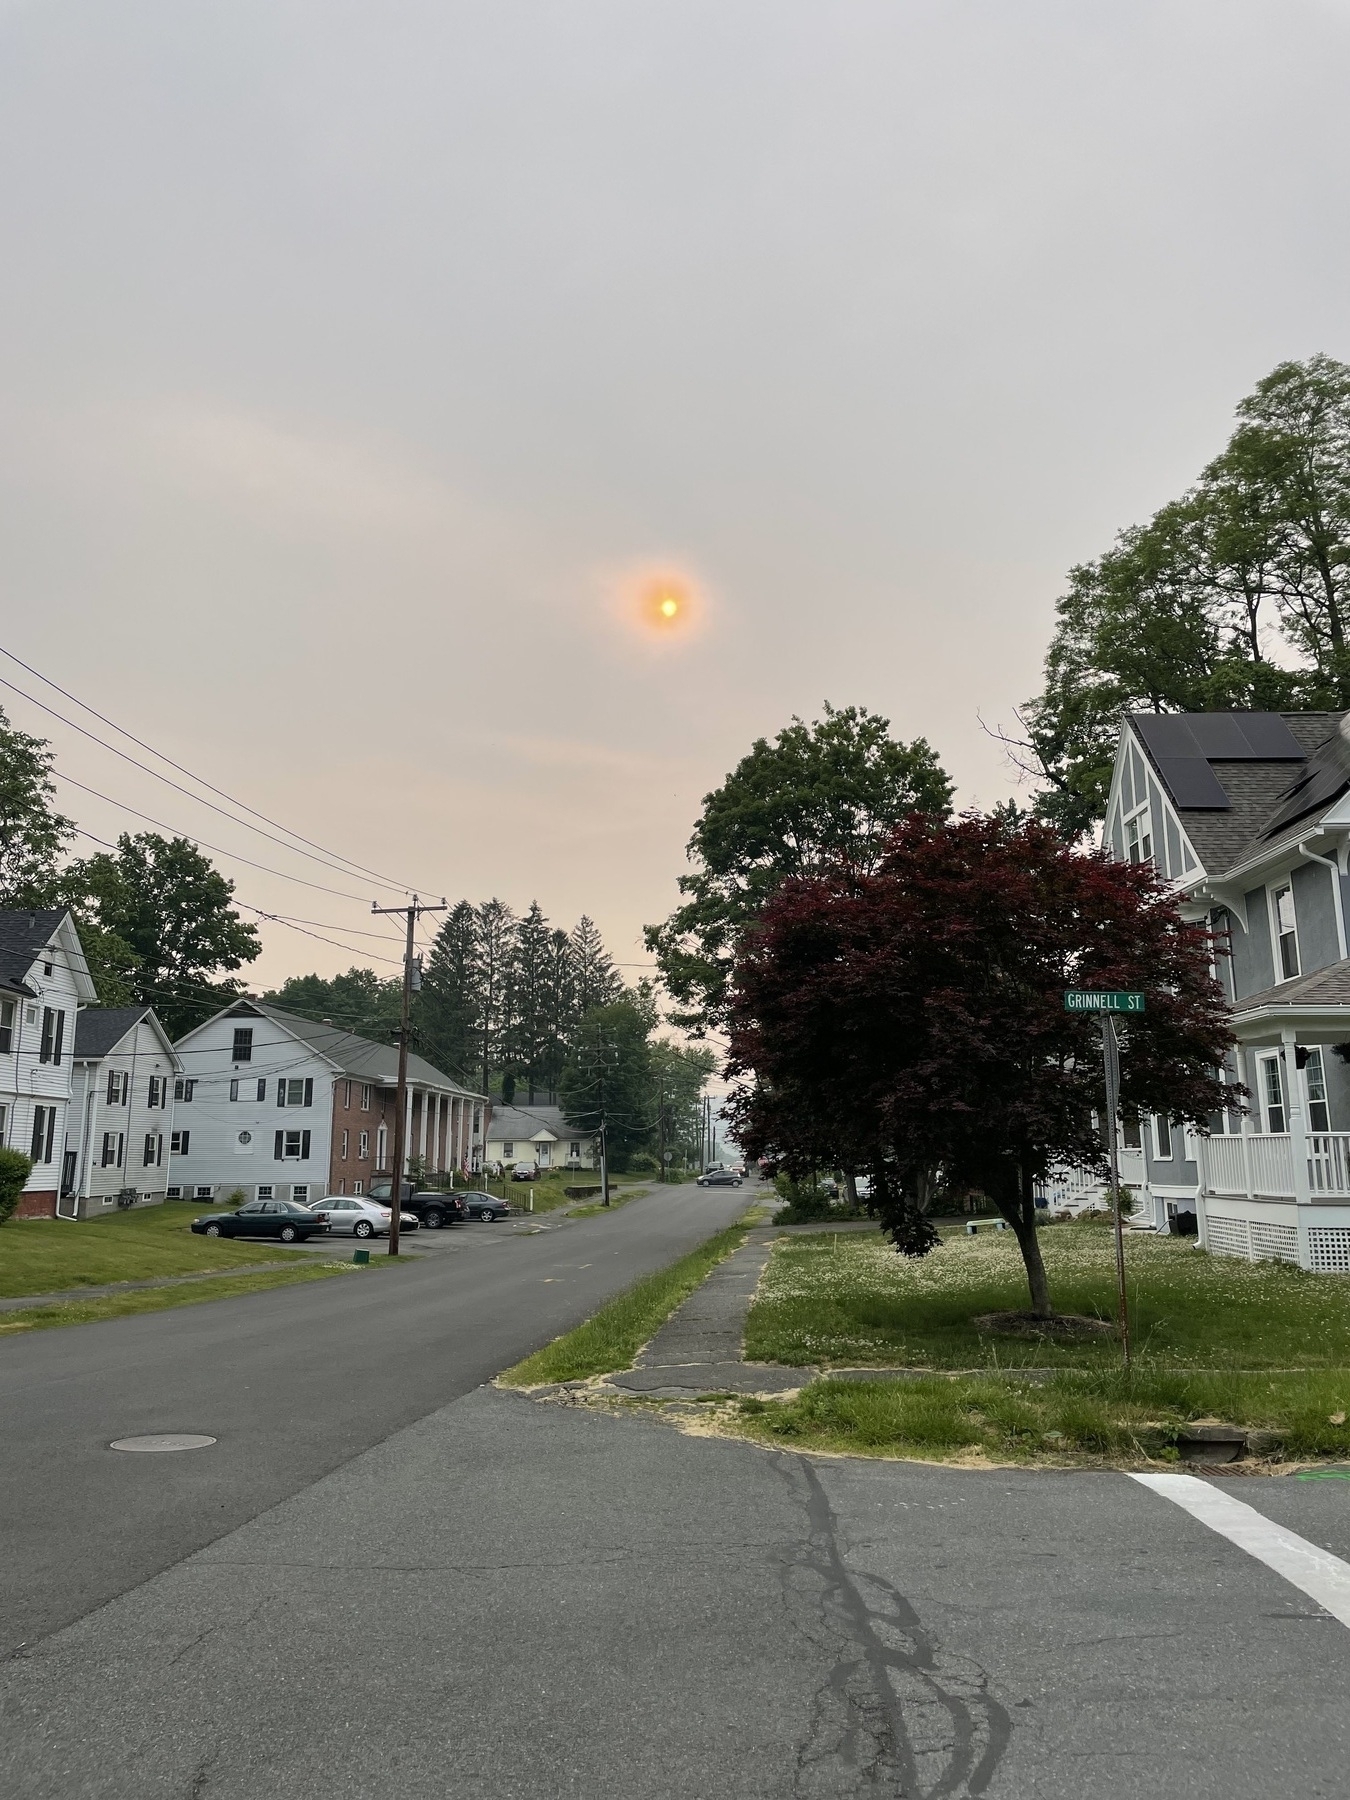 Weird orange sun over neighborhood street